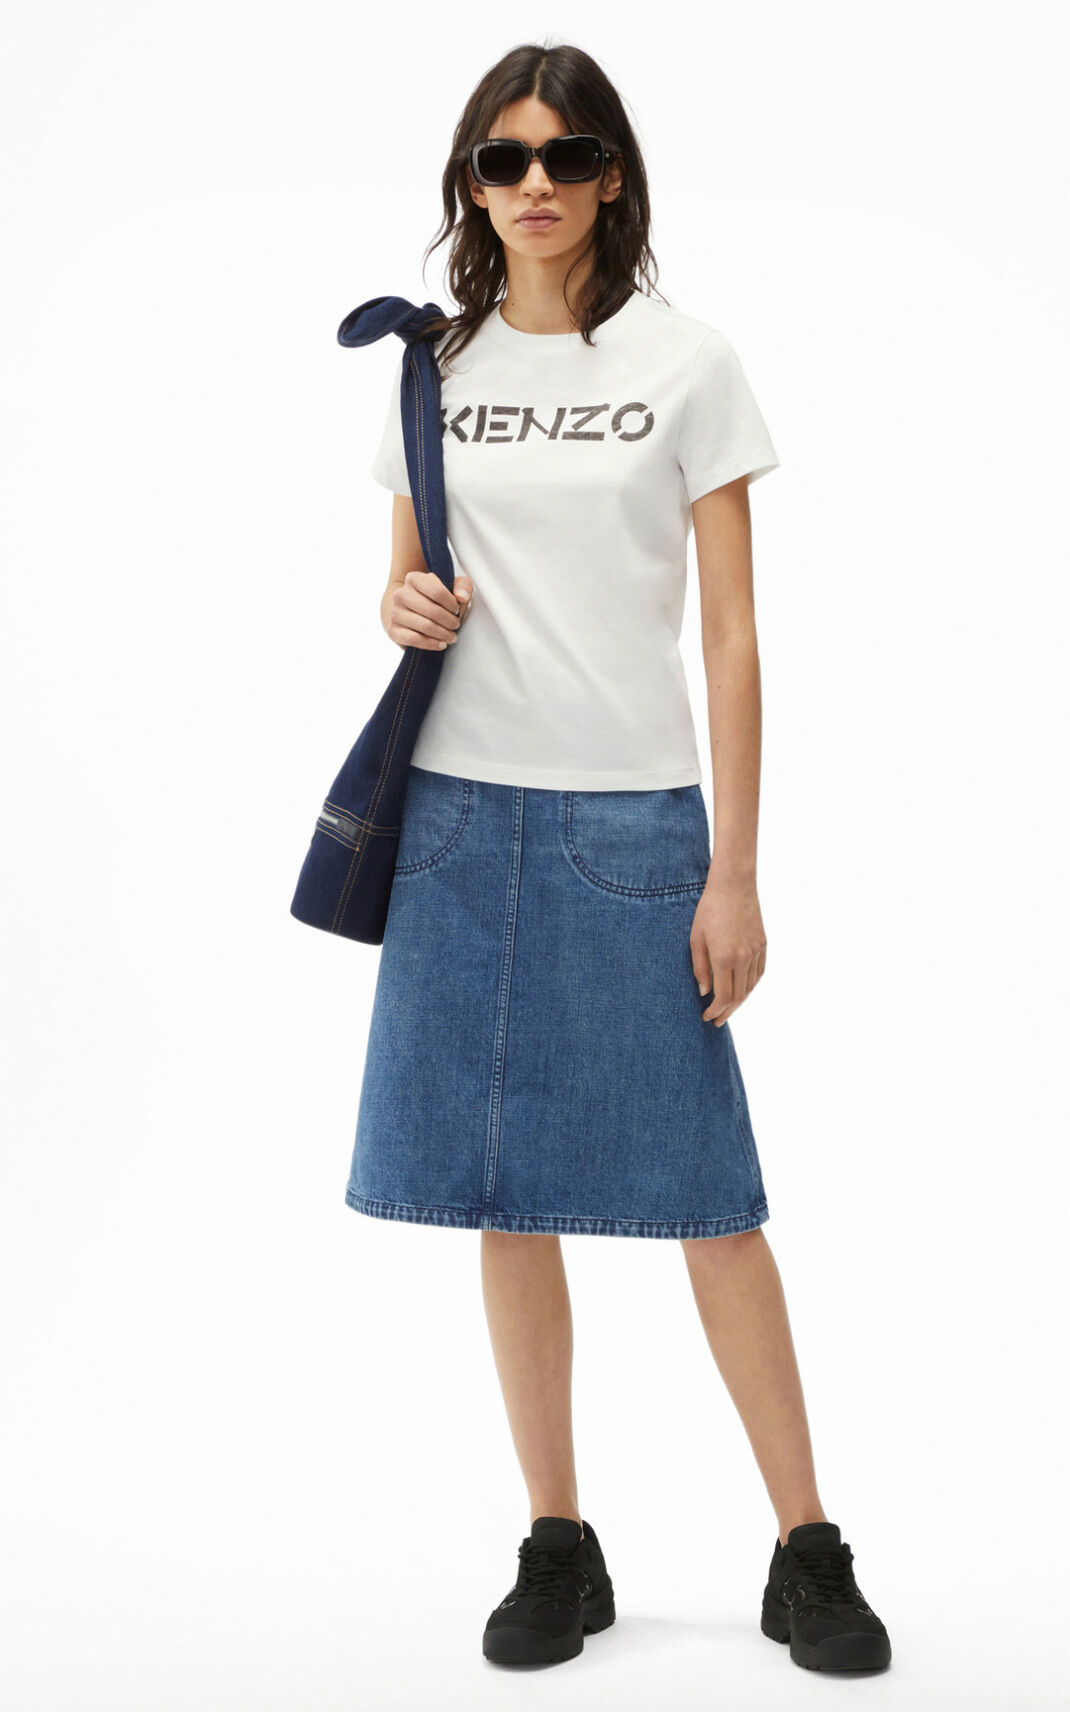 Kenzo Logo Tシャツ レディース 白 - VZDLMC412